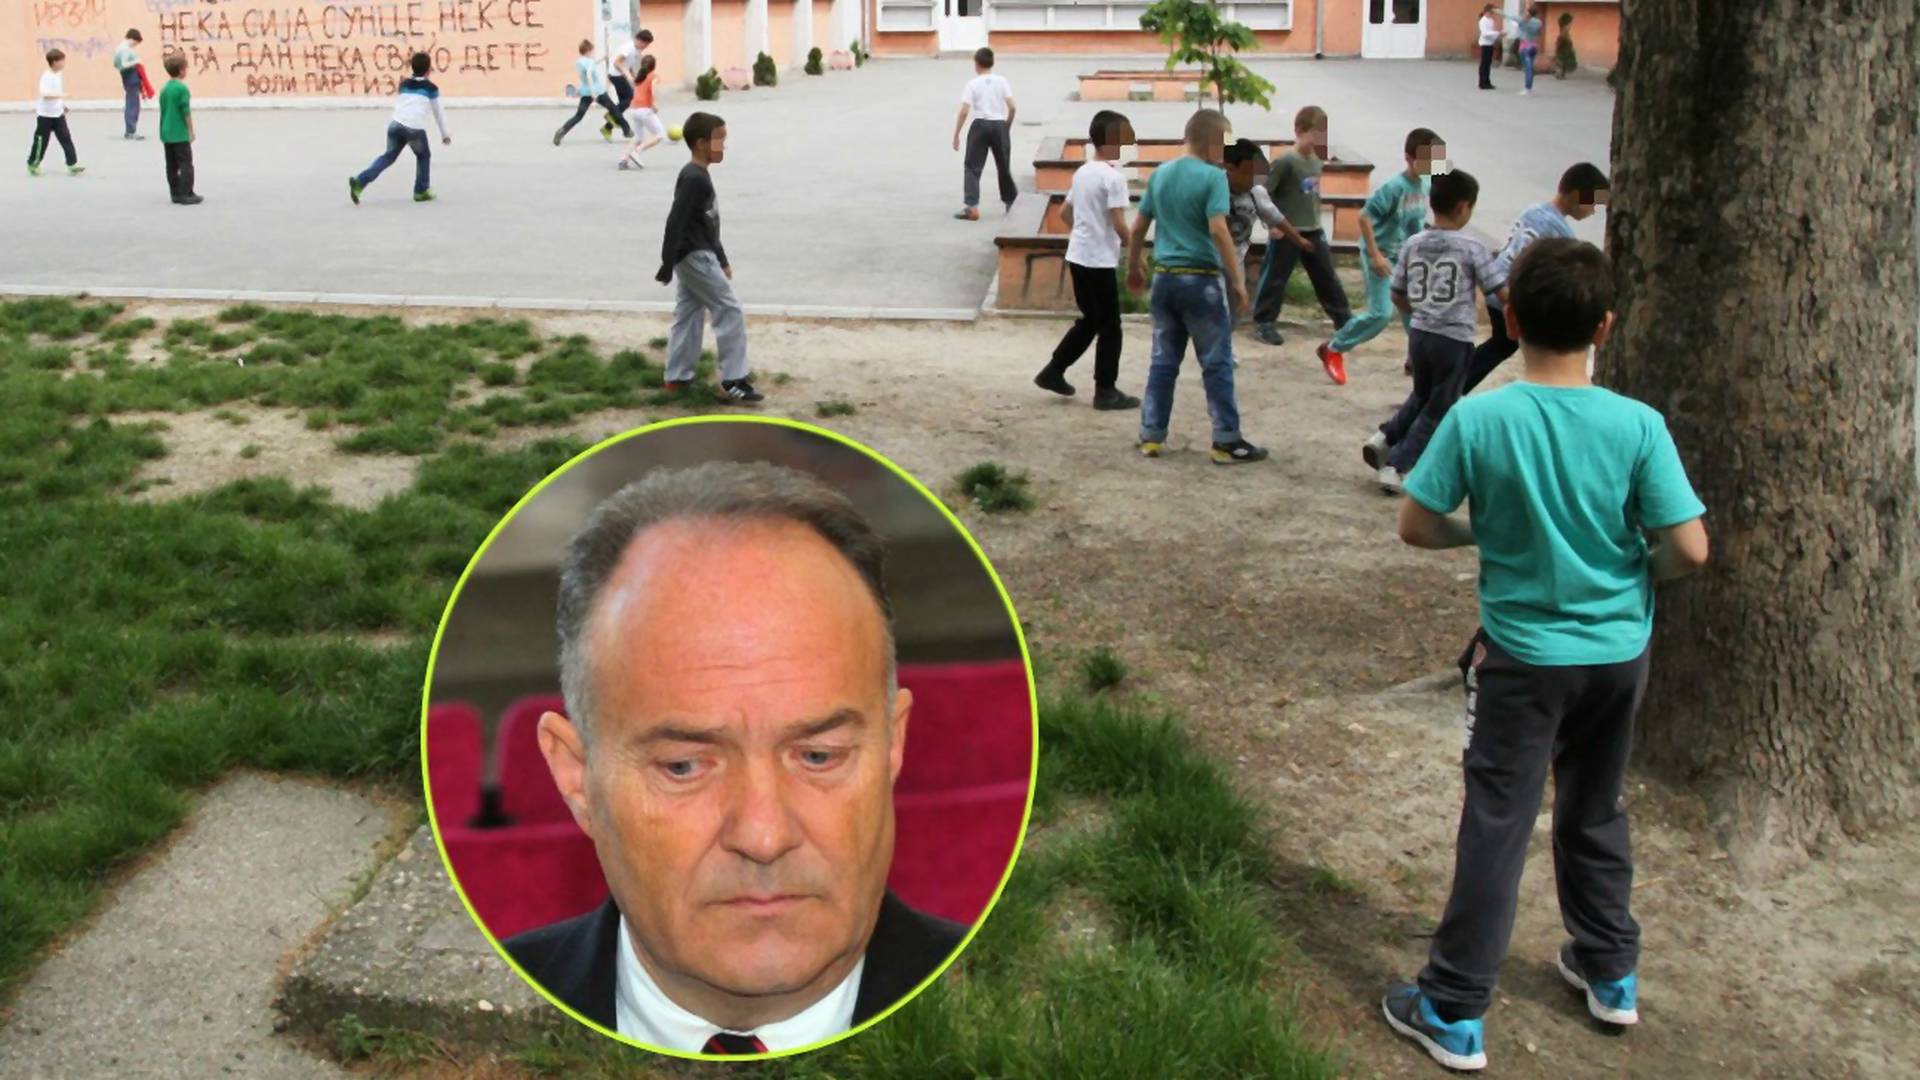 Sramotna reakcija ministra Šarčevića na slučaj trovanja učenice preparatom za stoku